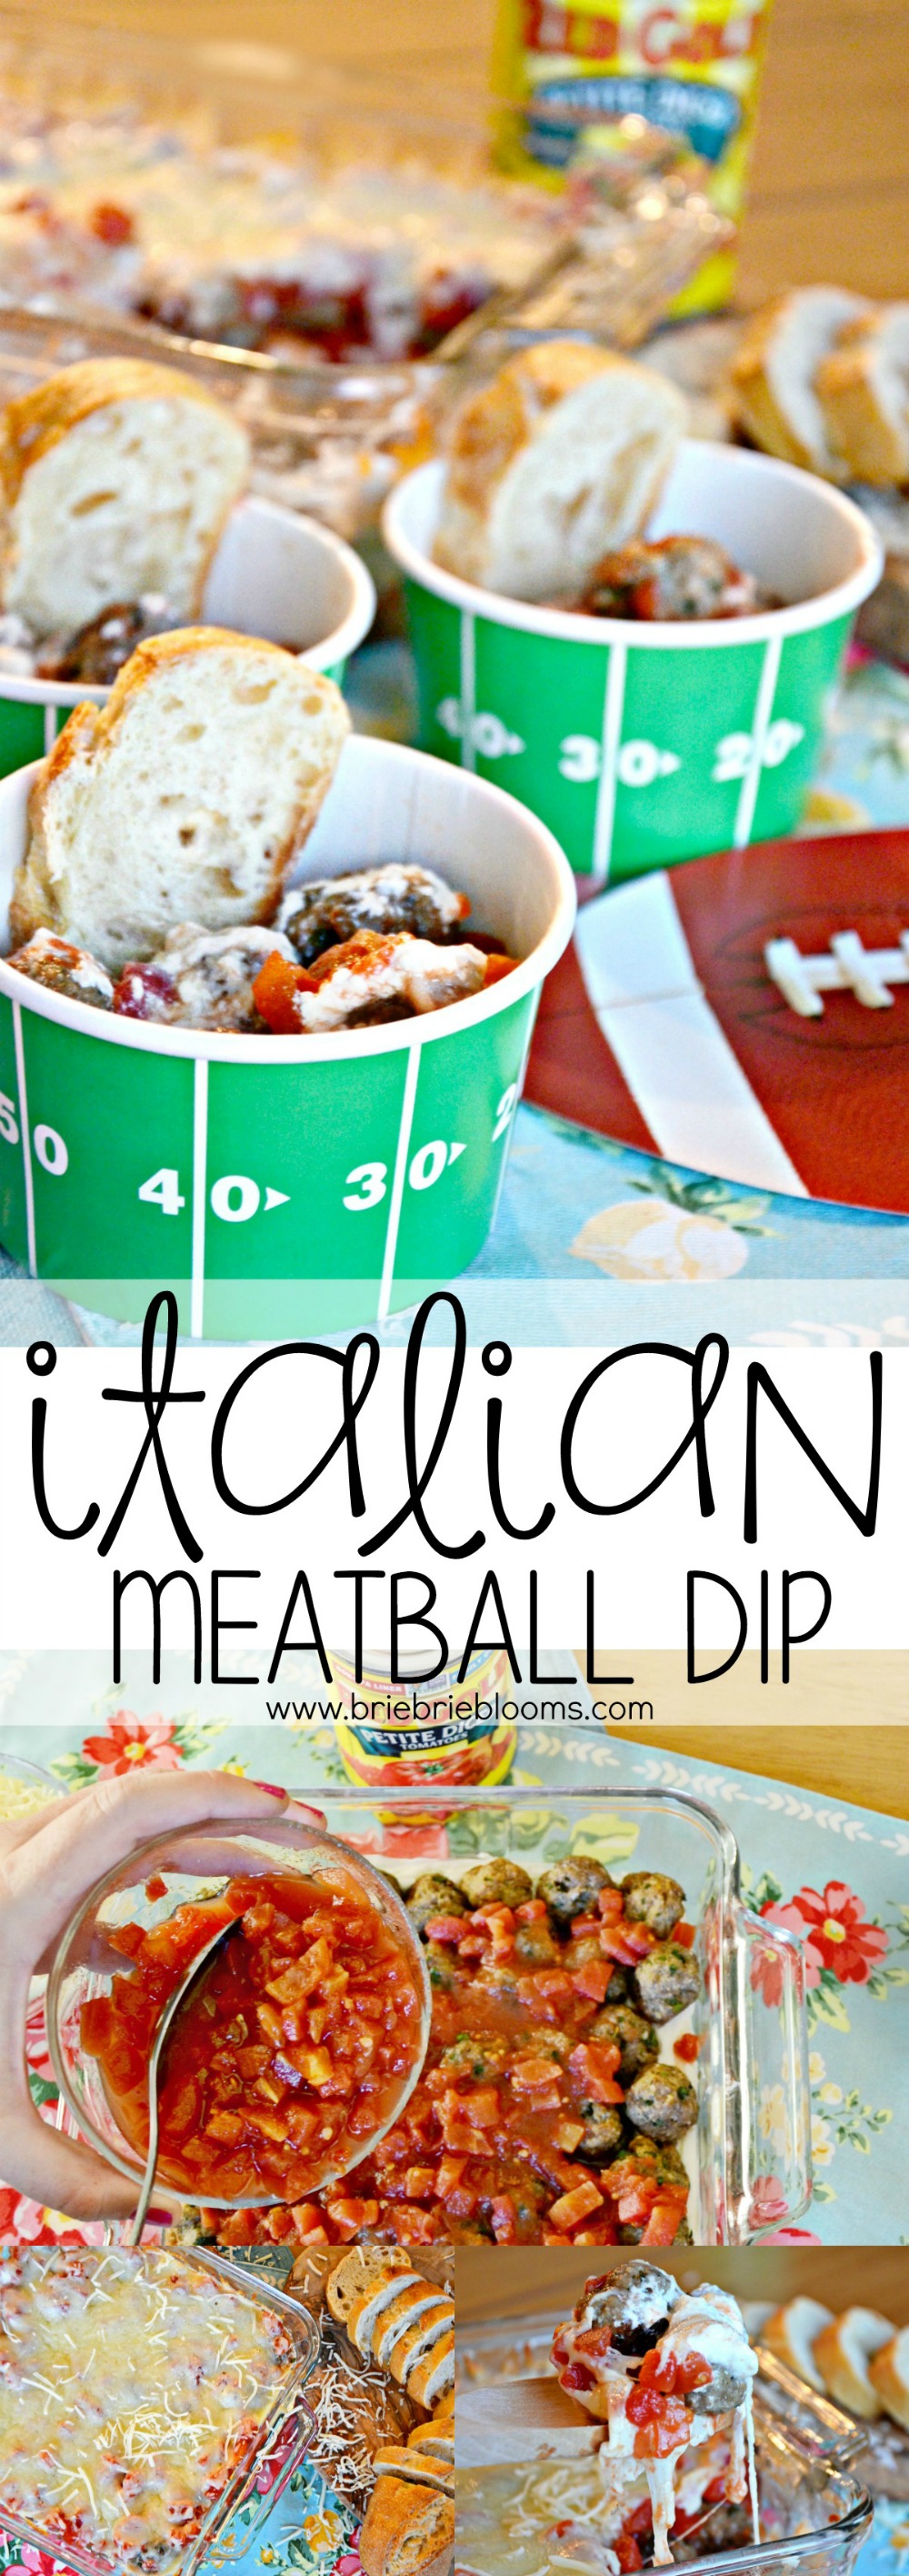 The Italian meatball dip recipe has layers of cream cheese, homemade meatballs, tomatoes and mozzarella cheese. YUM!